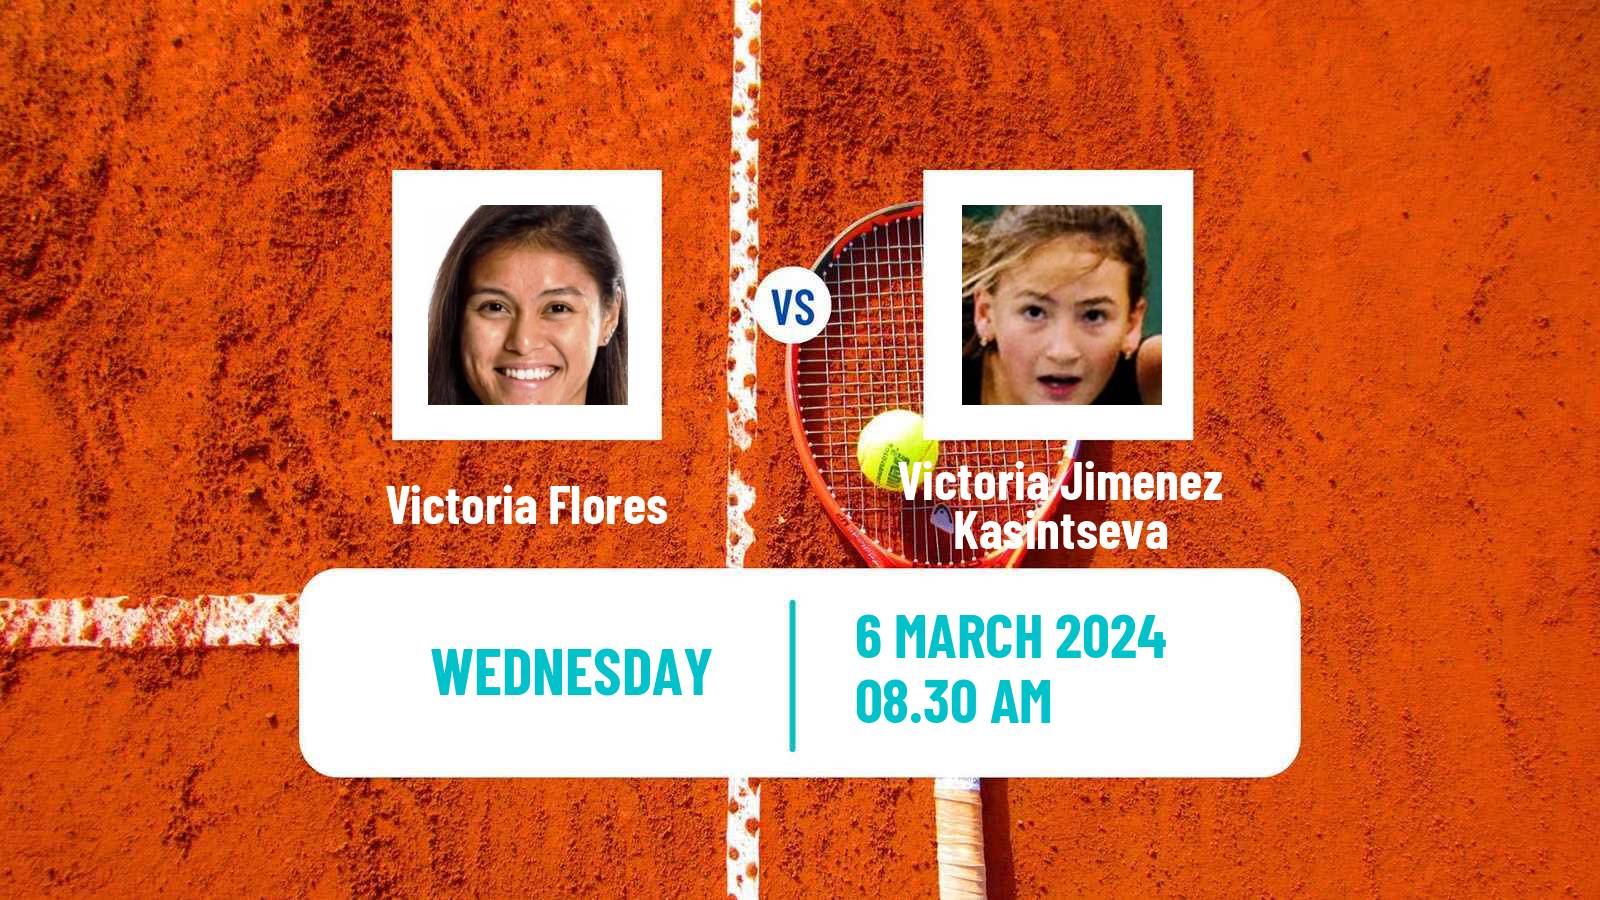 Tennis ITF W35 Santo Domingo Women Victoria Flores - Victoria Jimenez Kasintseva